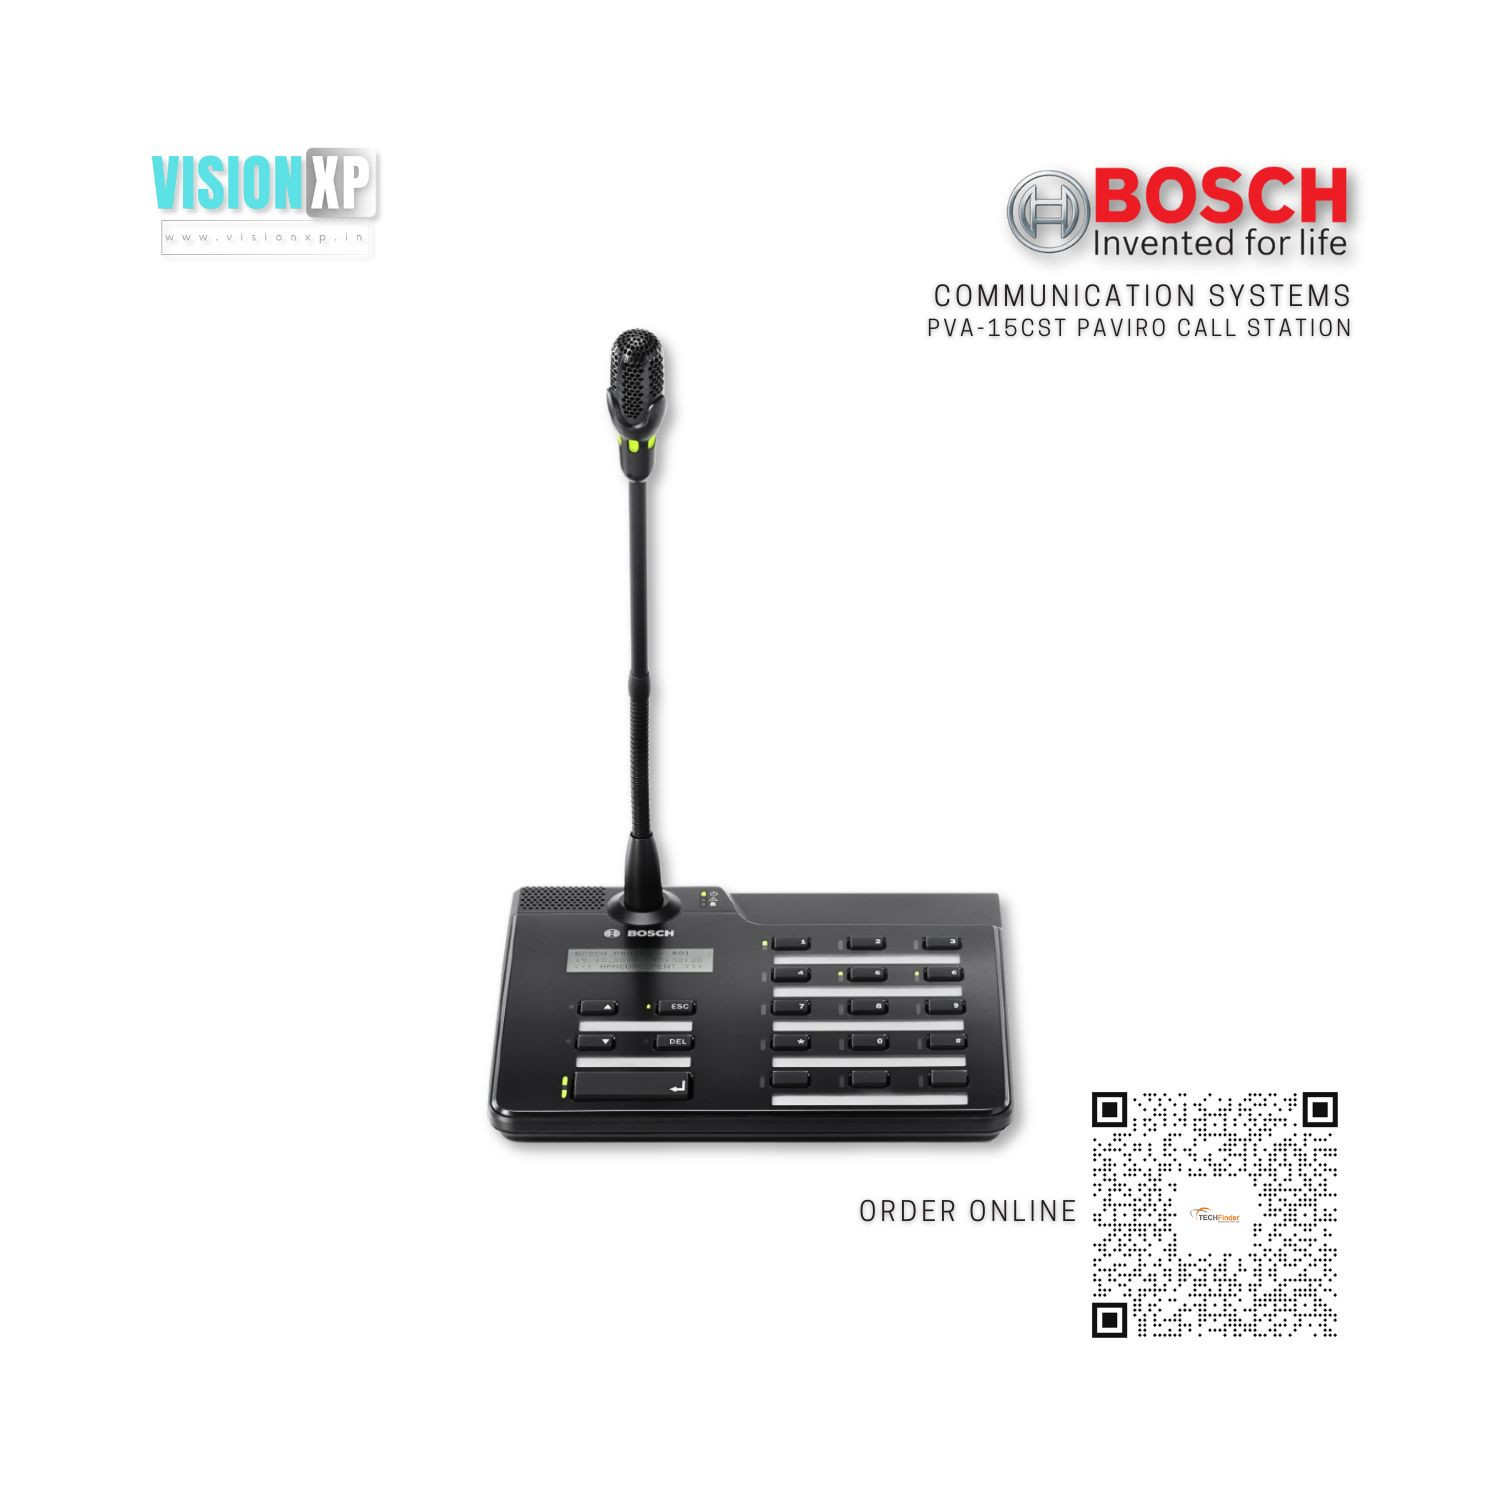 Bosch PVA-15CST Paviro Call Station